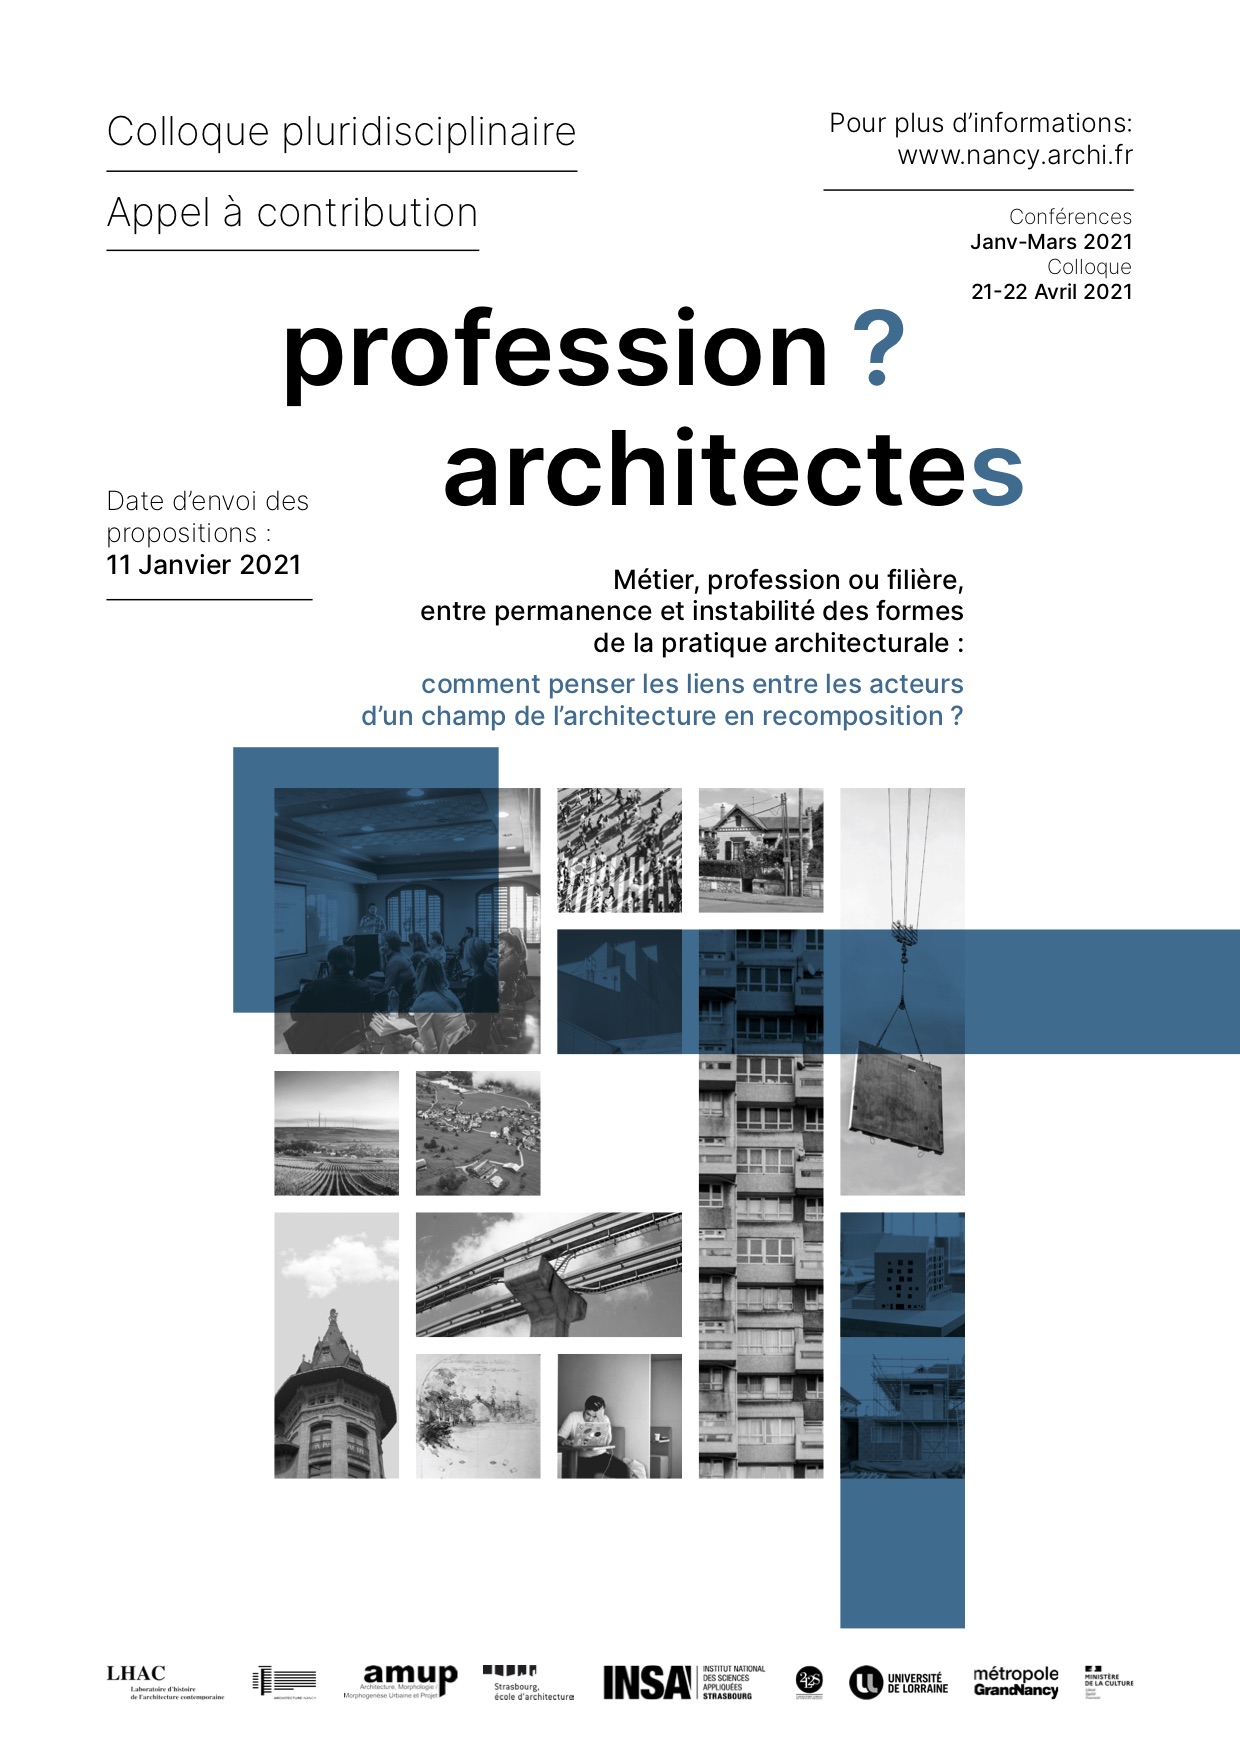 11/01/21 - Appel à contributions - Colloque pluridisciplinaire "Profession ? architectes"